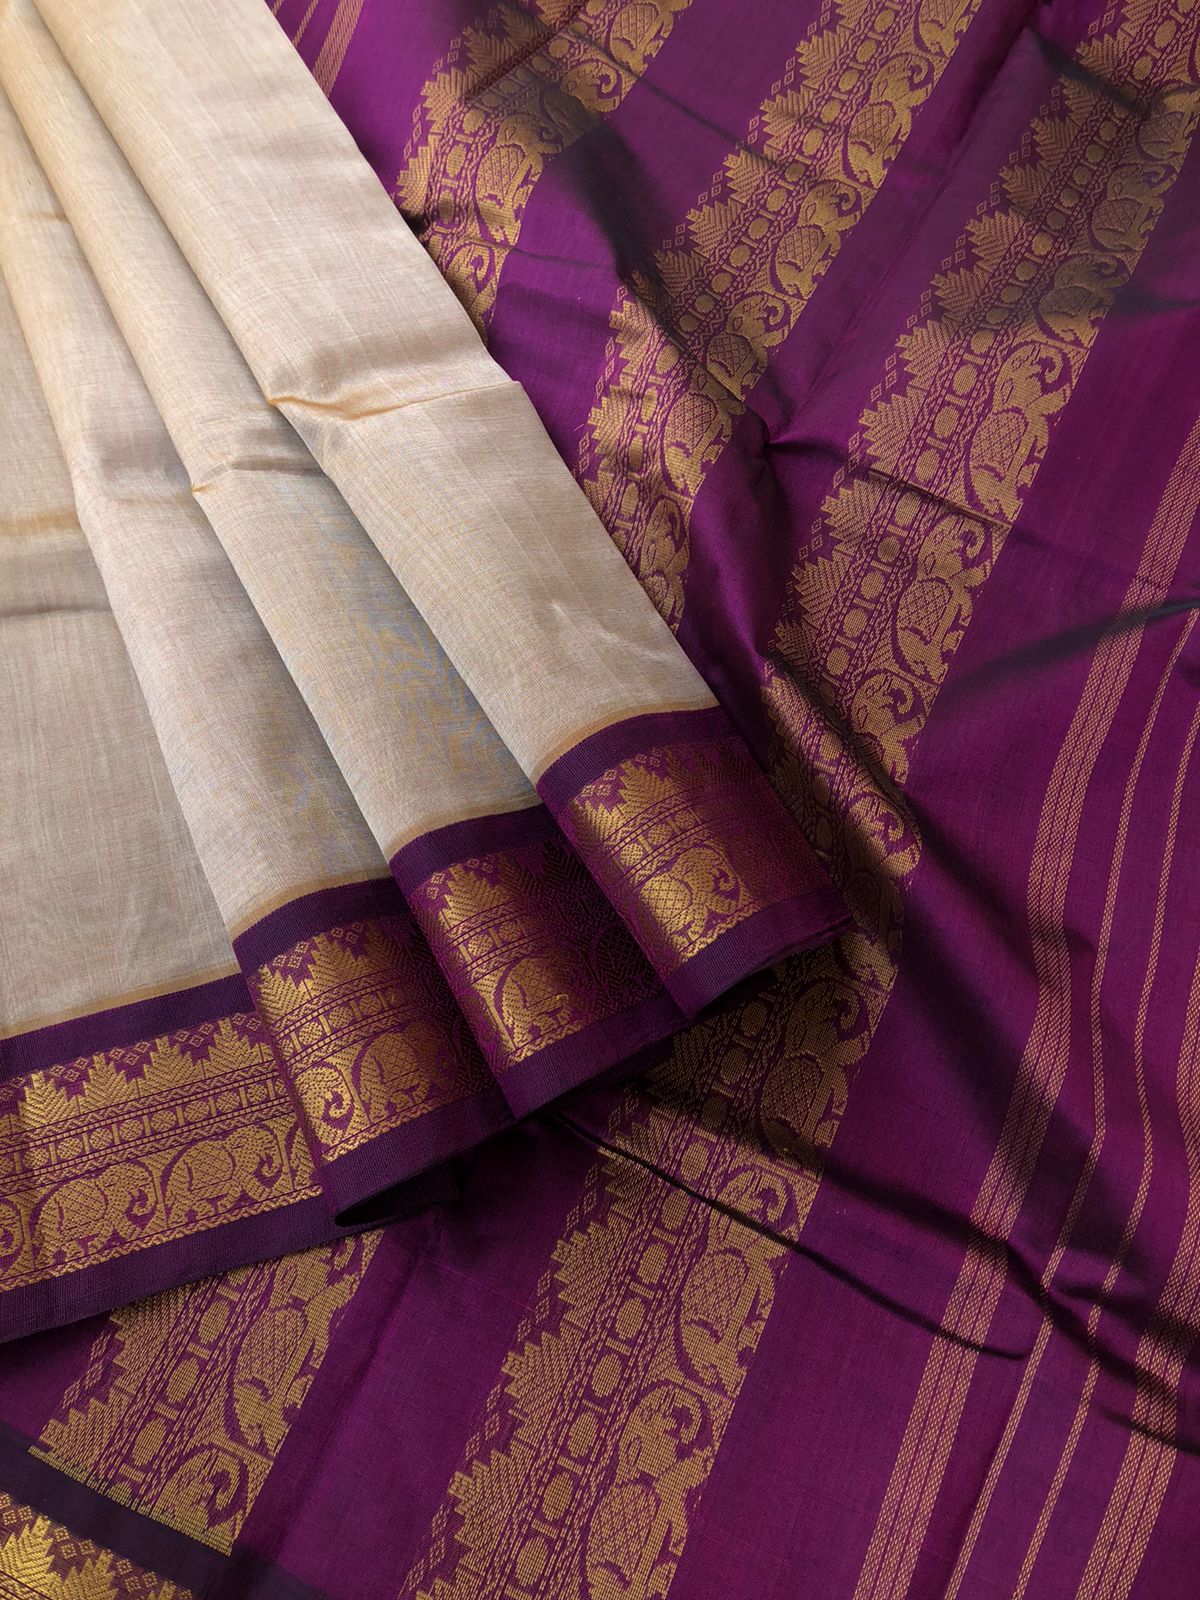 Korvai Silk Cotton - deep beige and purple